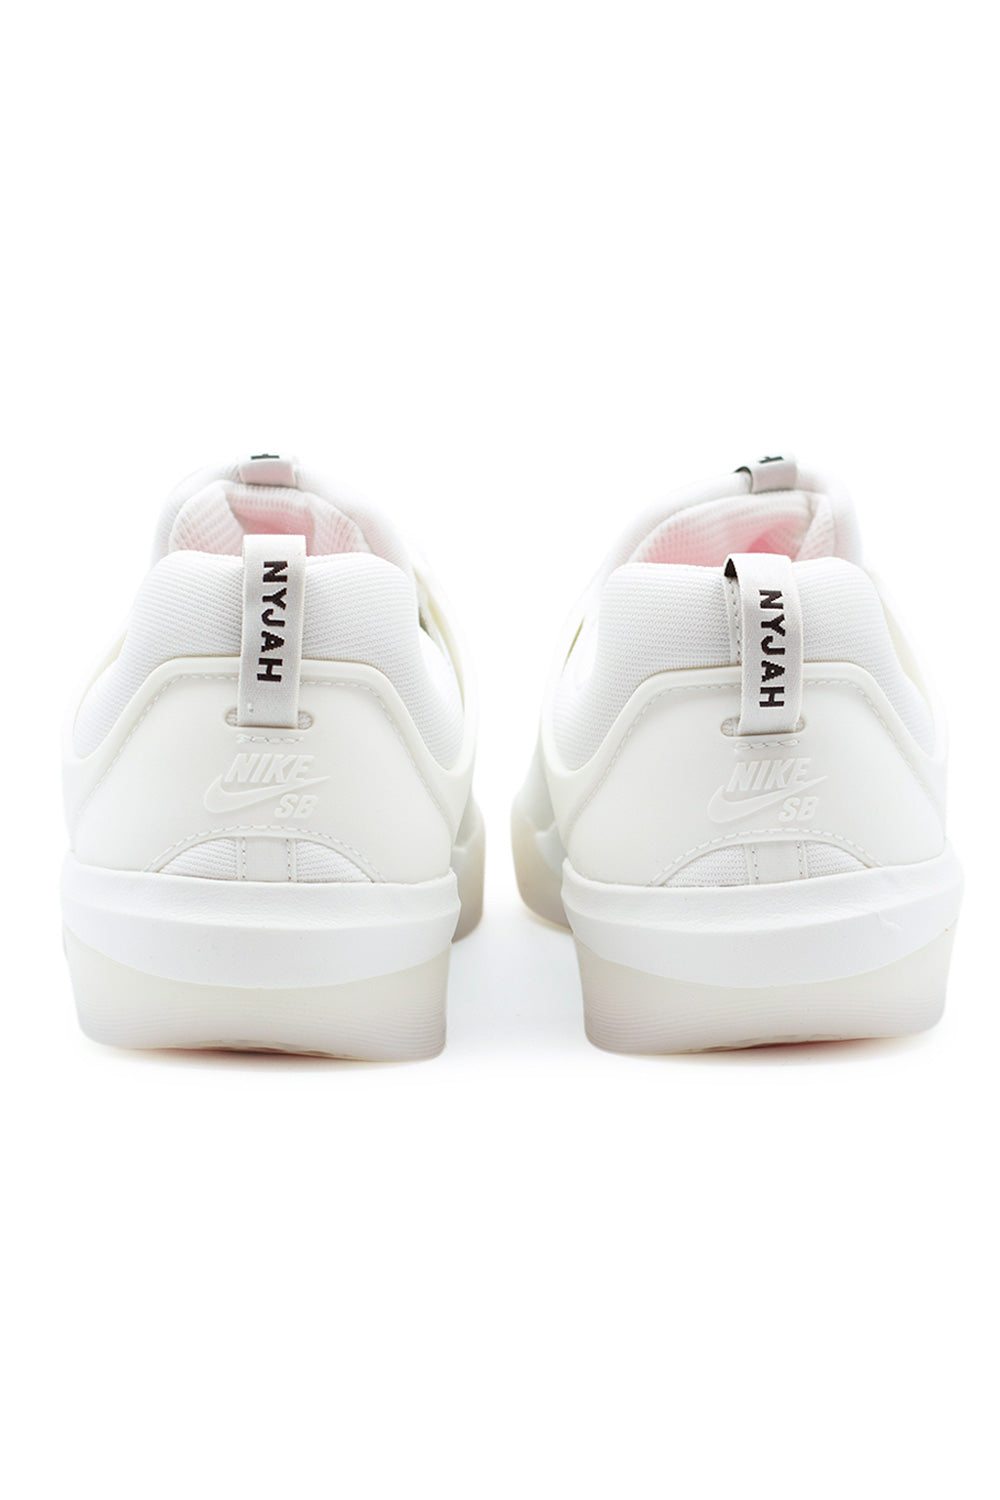 Nike SB Zoom Nyjah 3 Shoe White / Black / Summit White - BONKERS